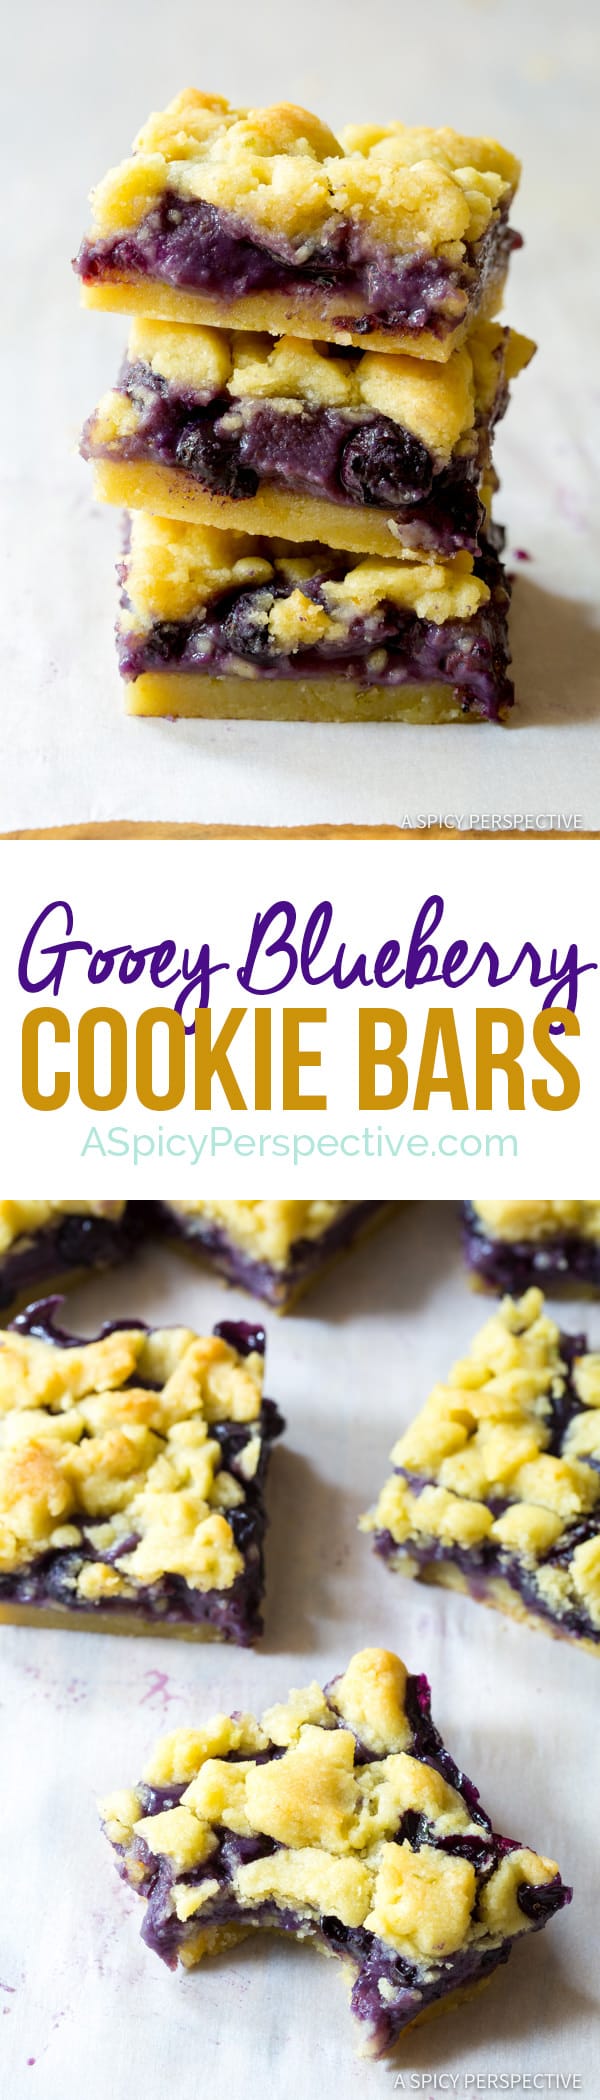 The Best Gooey Blueberry Cookie Bars | ASpicyPerspective.com